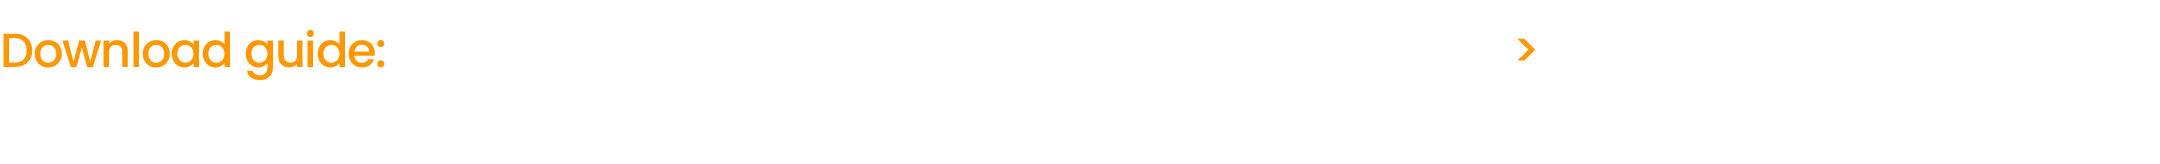 RevOps Data Automation Platform buyer's guide